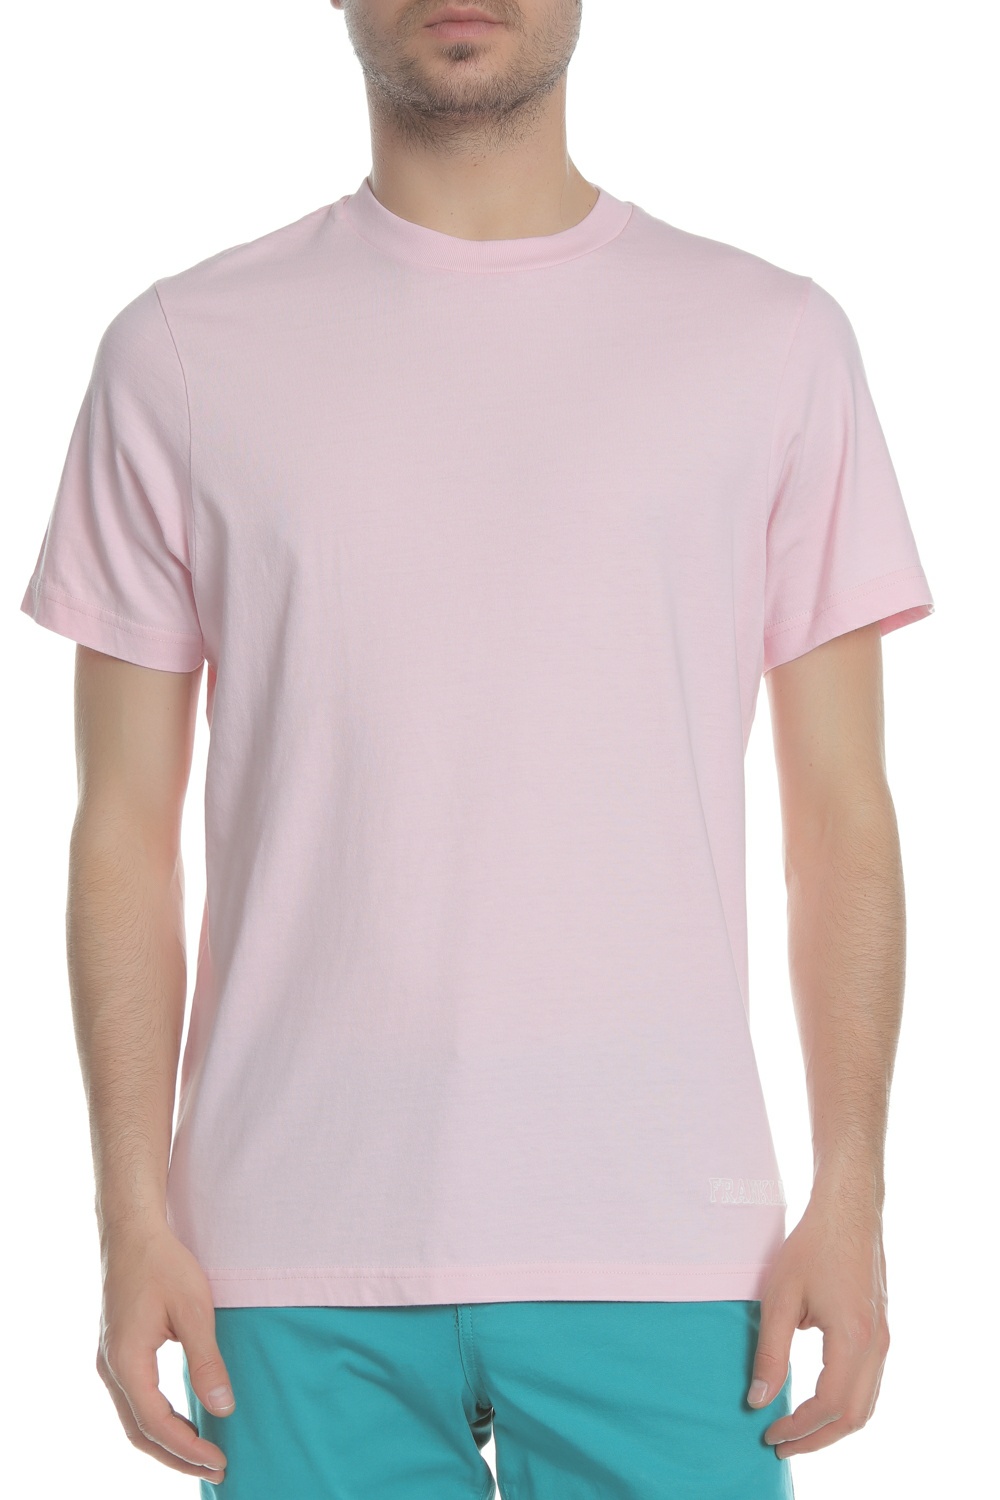 FRANKLIN & MARSHALL FRANKLIN & MARSHALL - Ανδρική κοντομάνικη μπλούζα FRANKLIN & MARSHALL ροζ